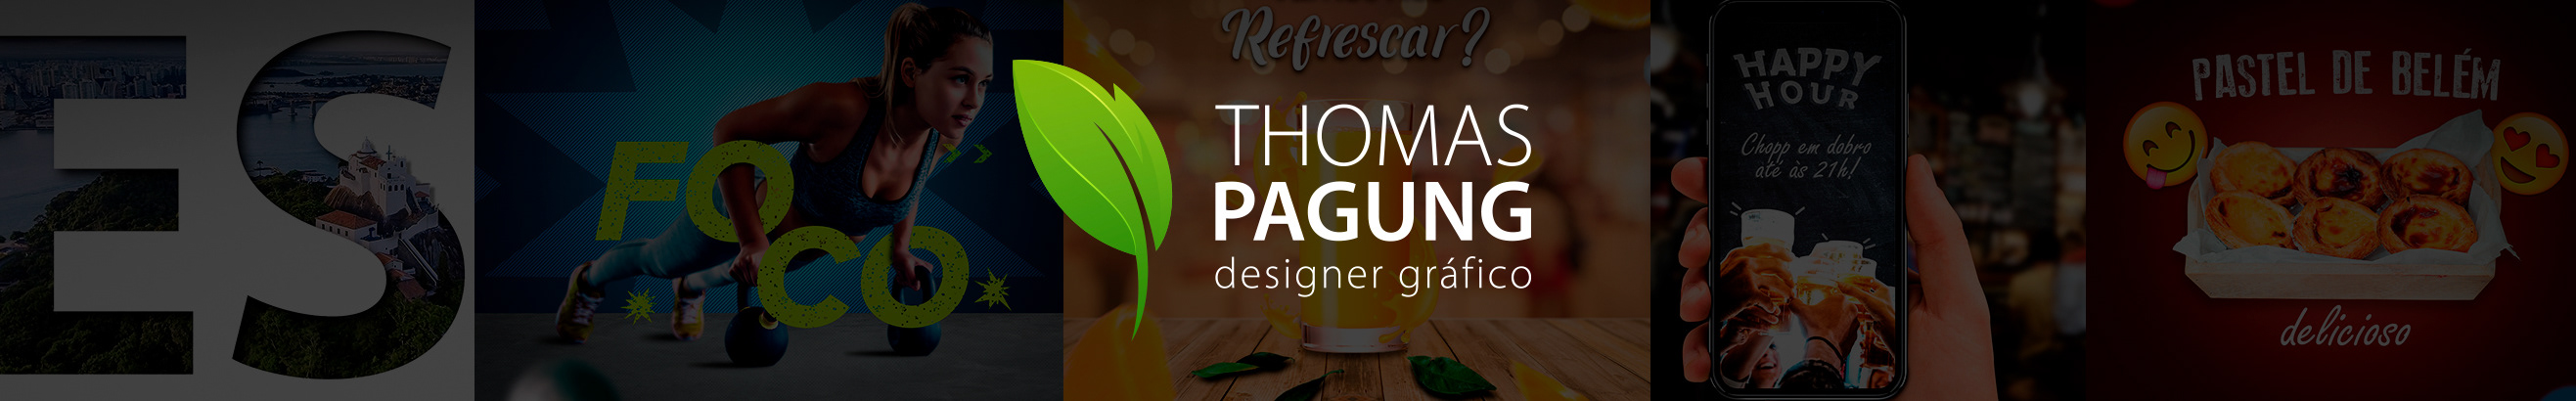 Thomas Pagung's profile banner